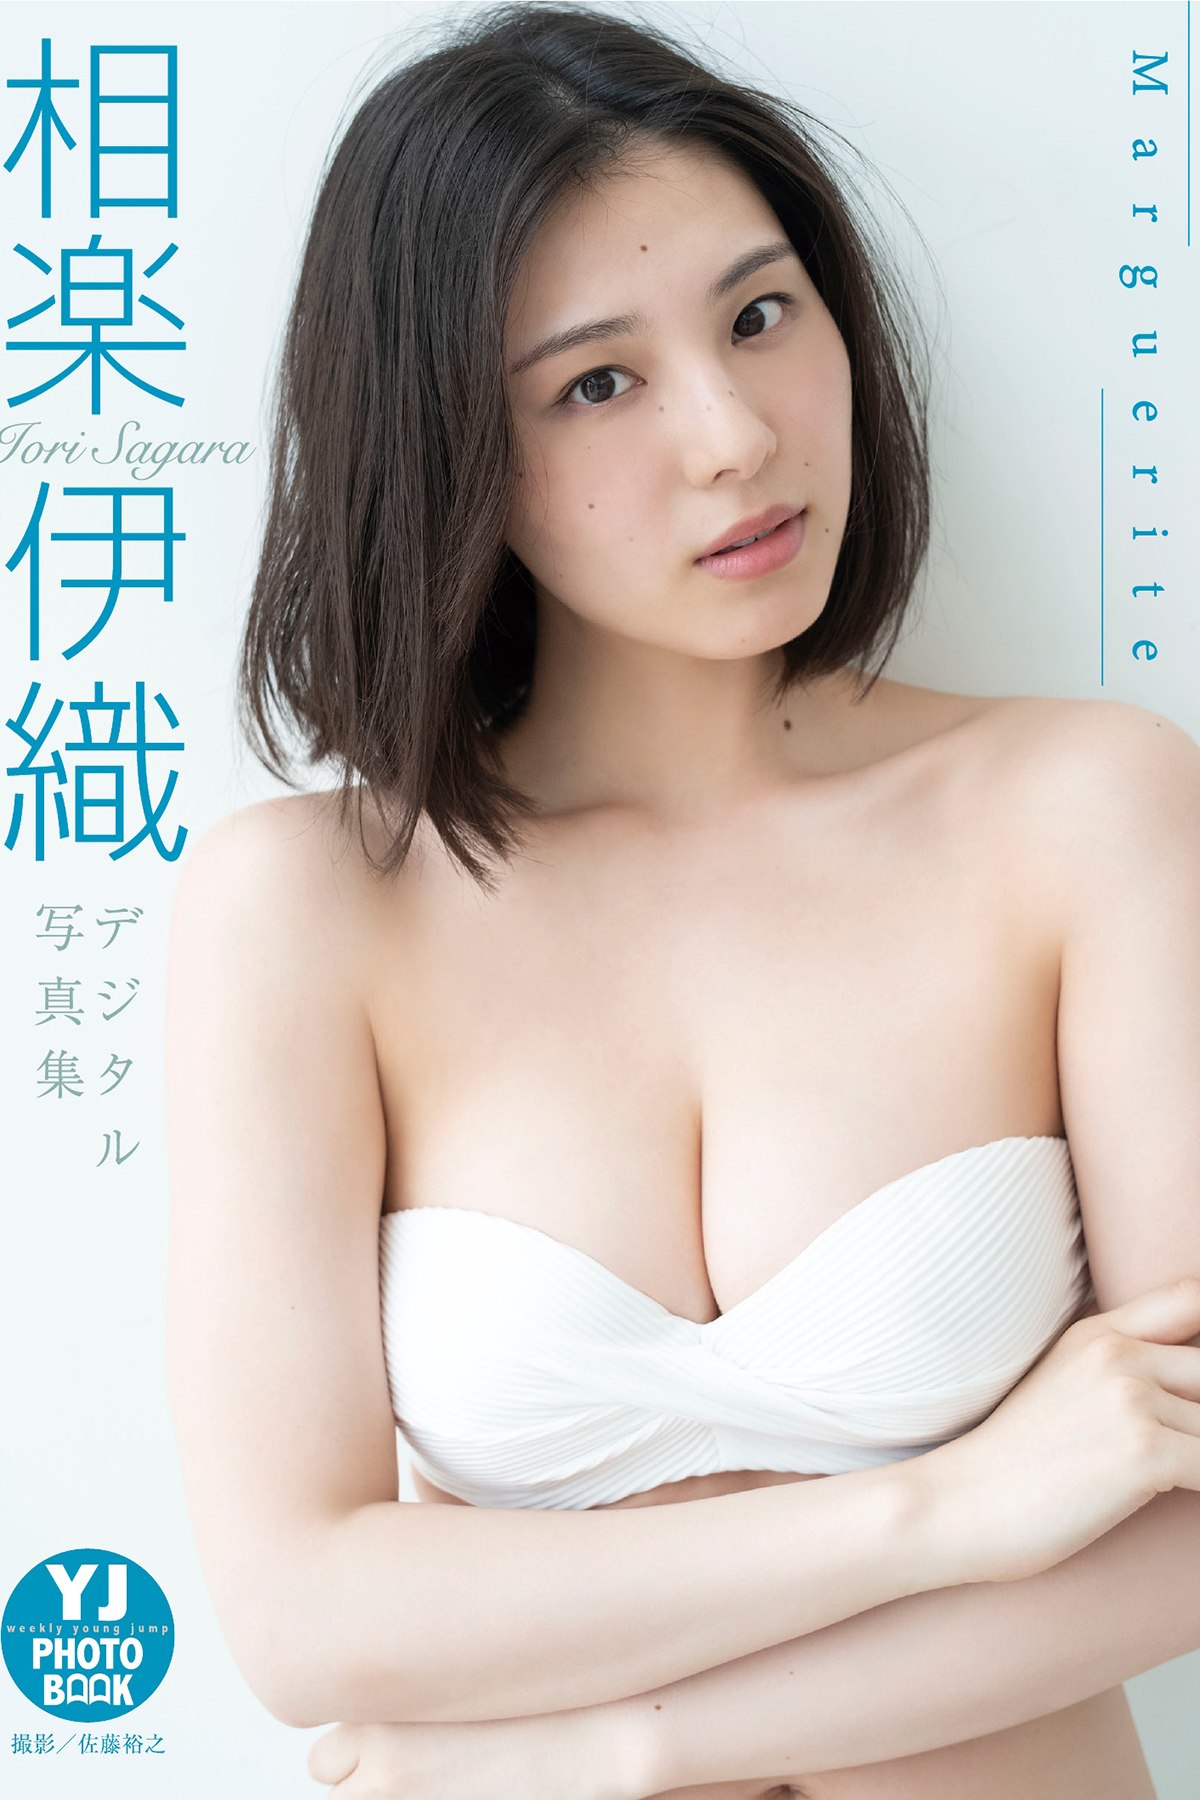 YJ Photobook 2023-07-06 Iori Sagara 相楽伊織 – Marguerite